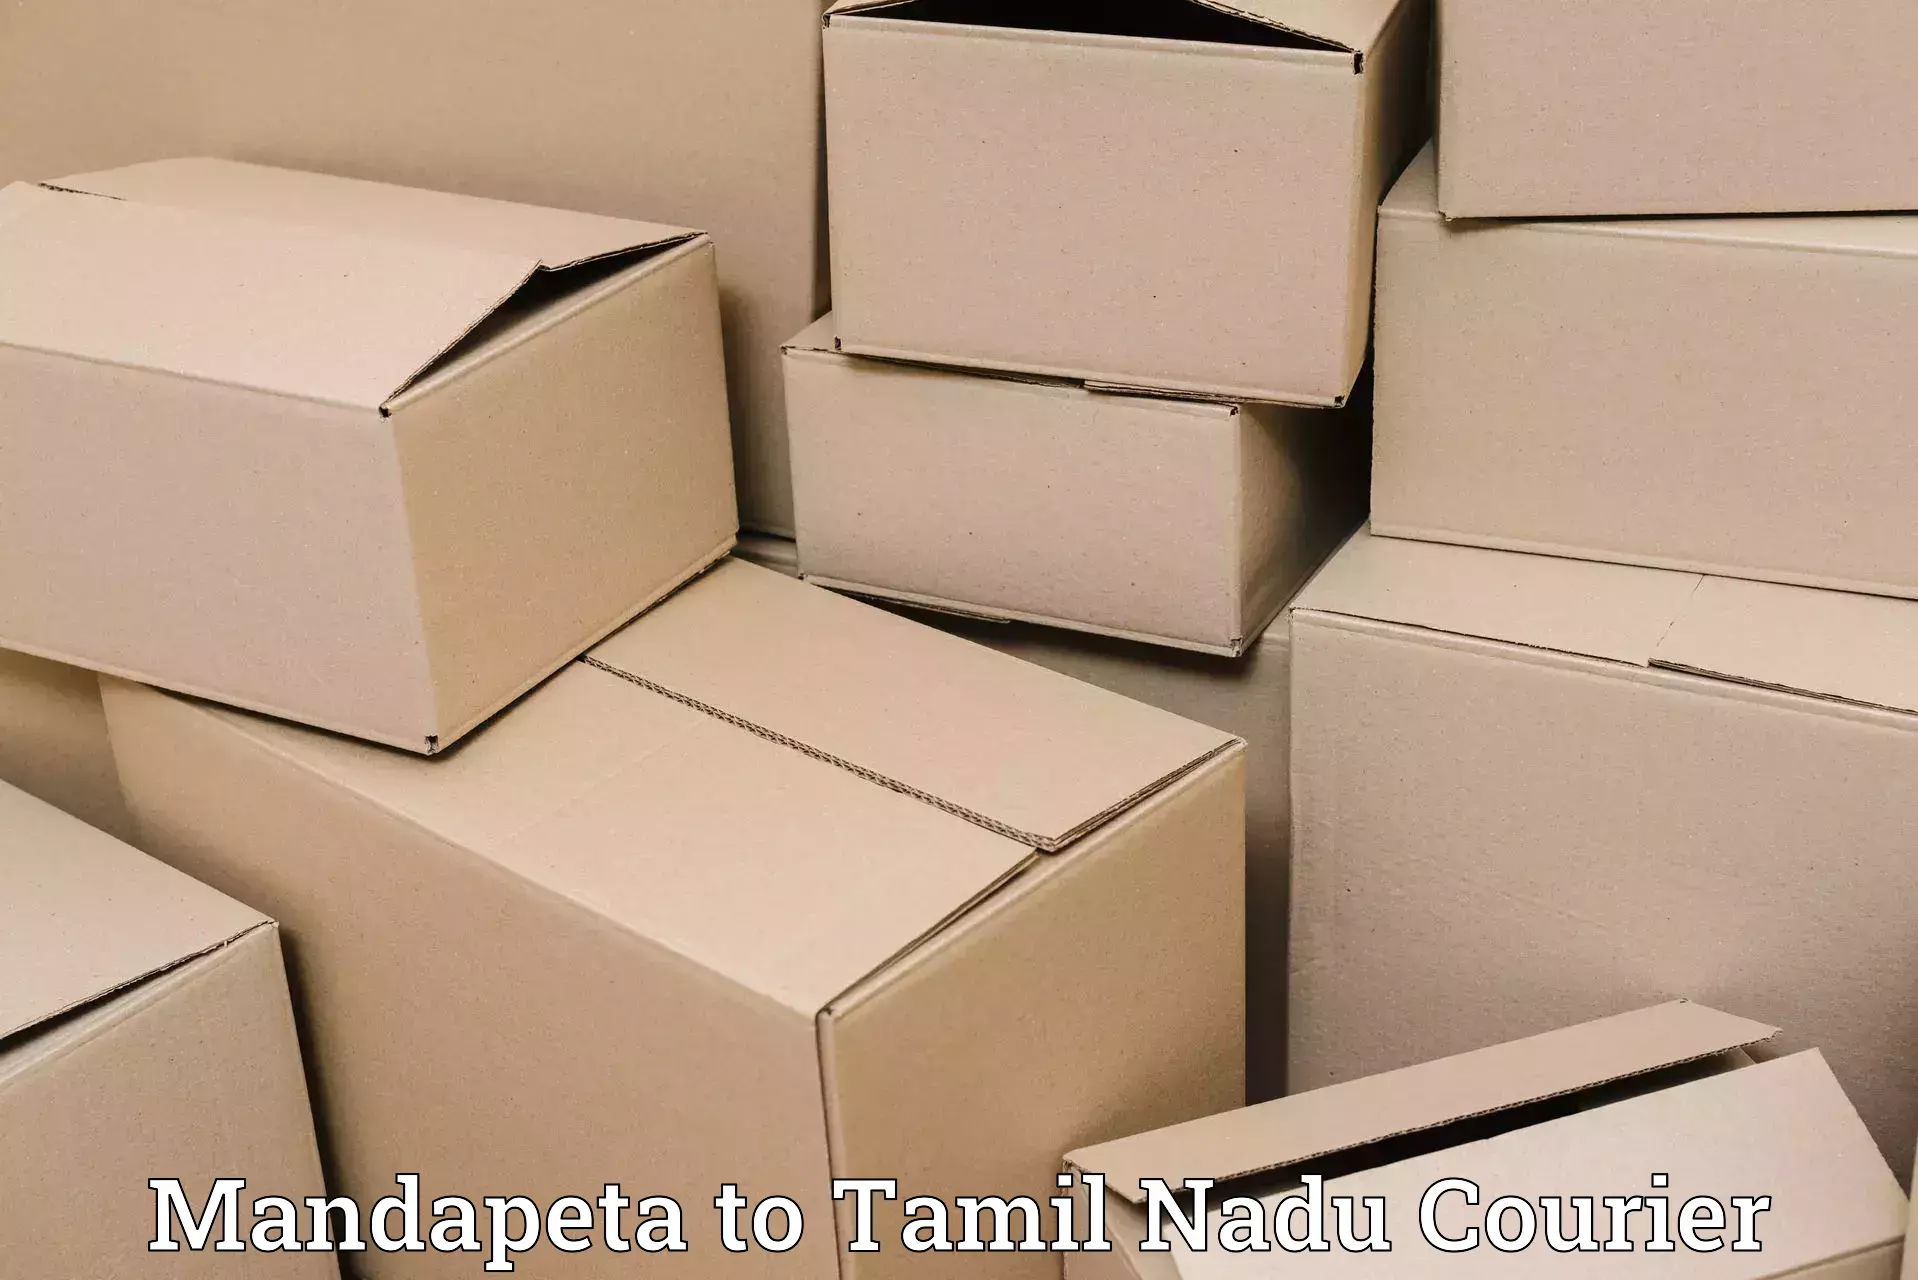 Streamlined delivery processes Mandapeta to Tamil Nadu